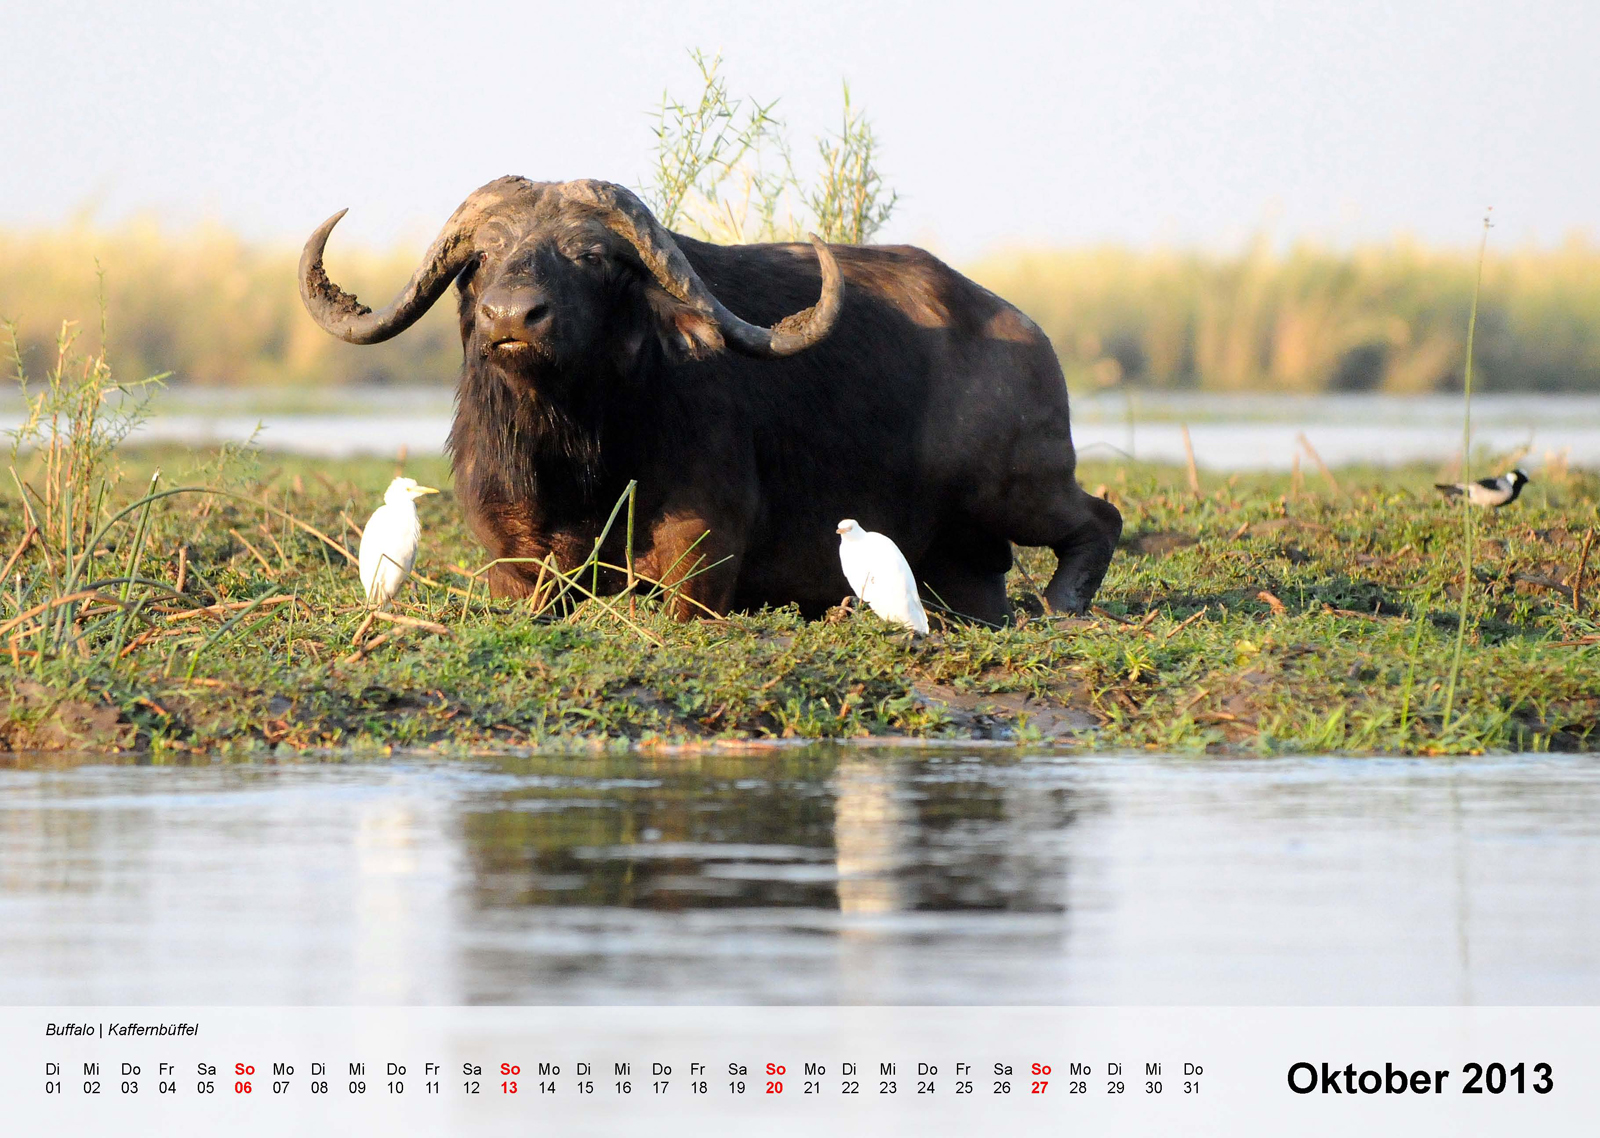 Buffalo | Kaffernbüffel - Kalender 2013 - Oktober